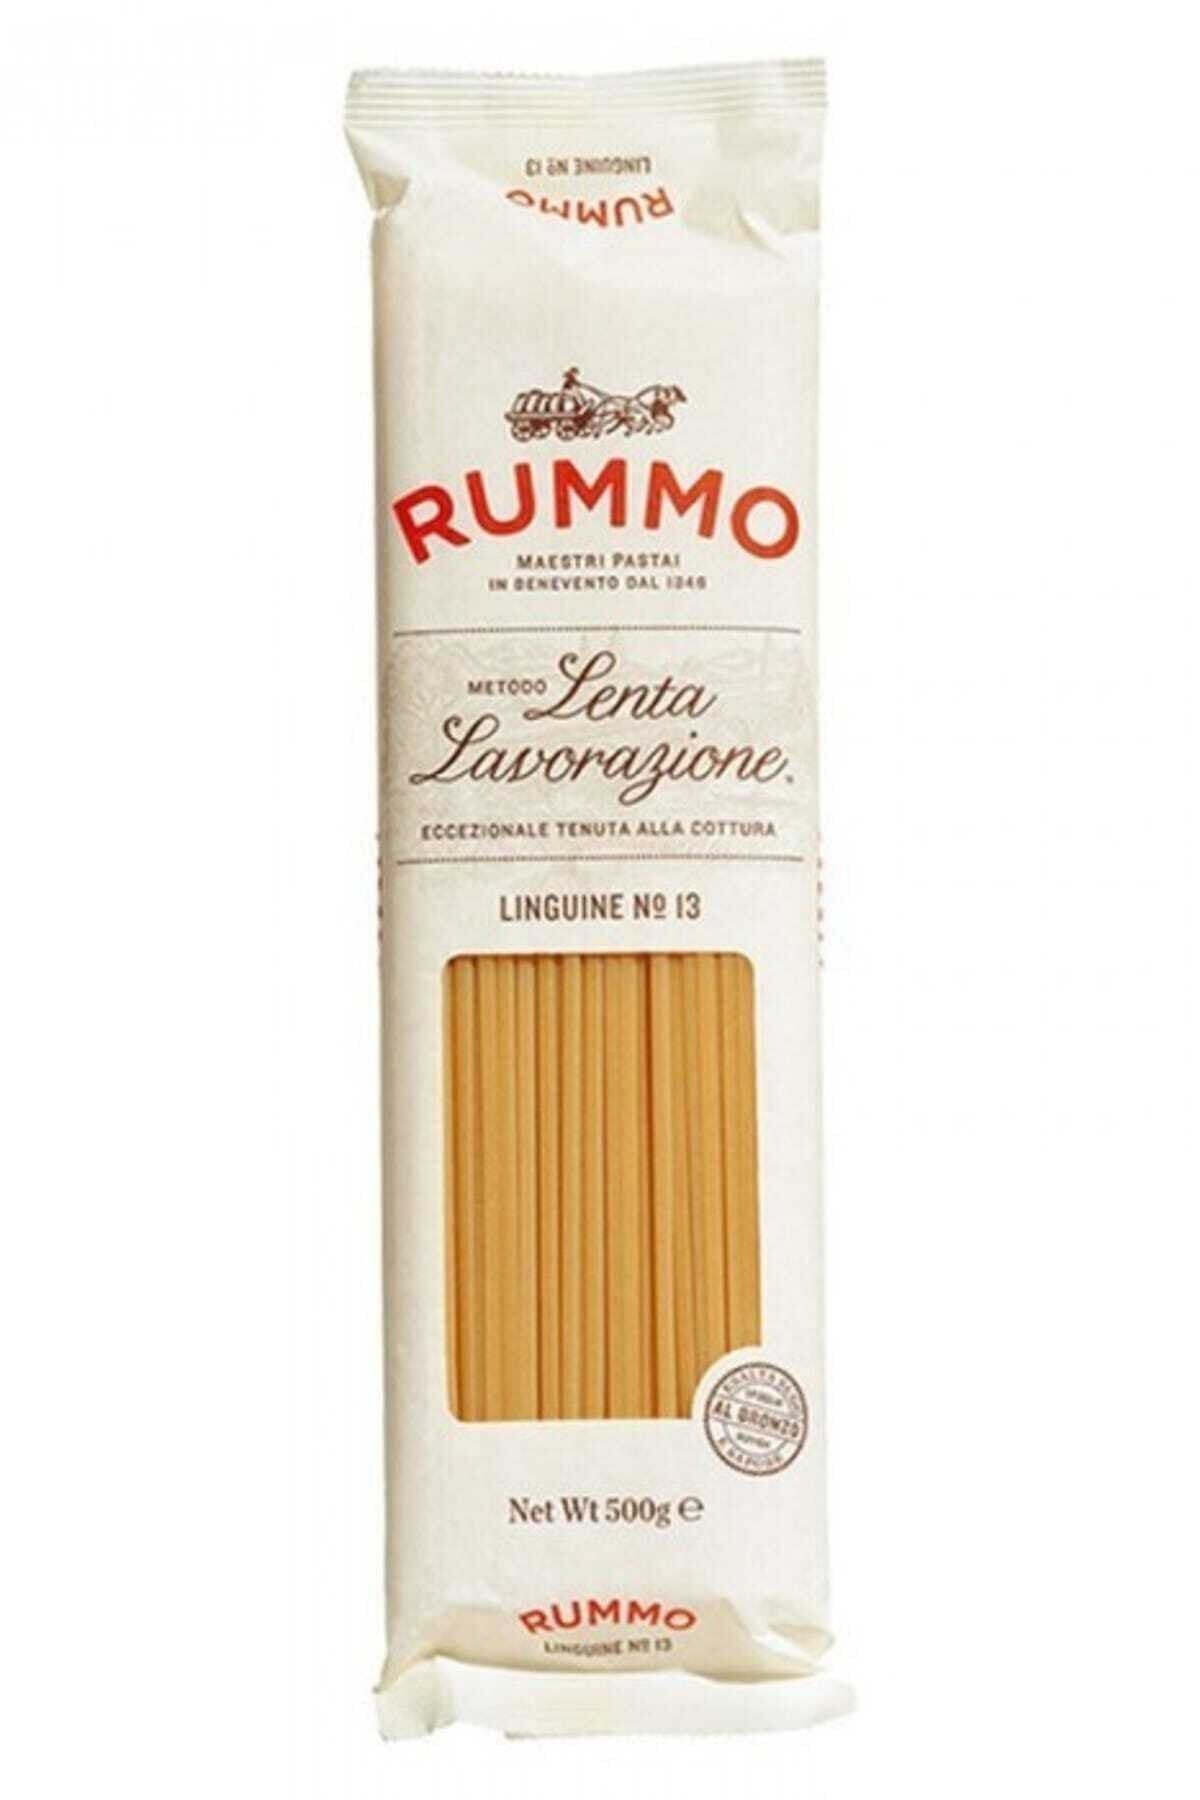 Rummo Linguine No:13 500 gr